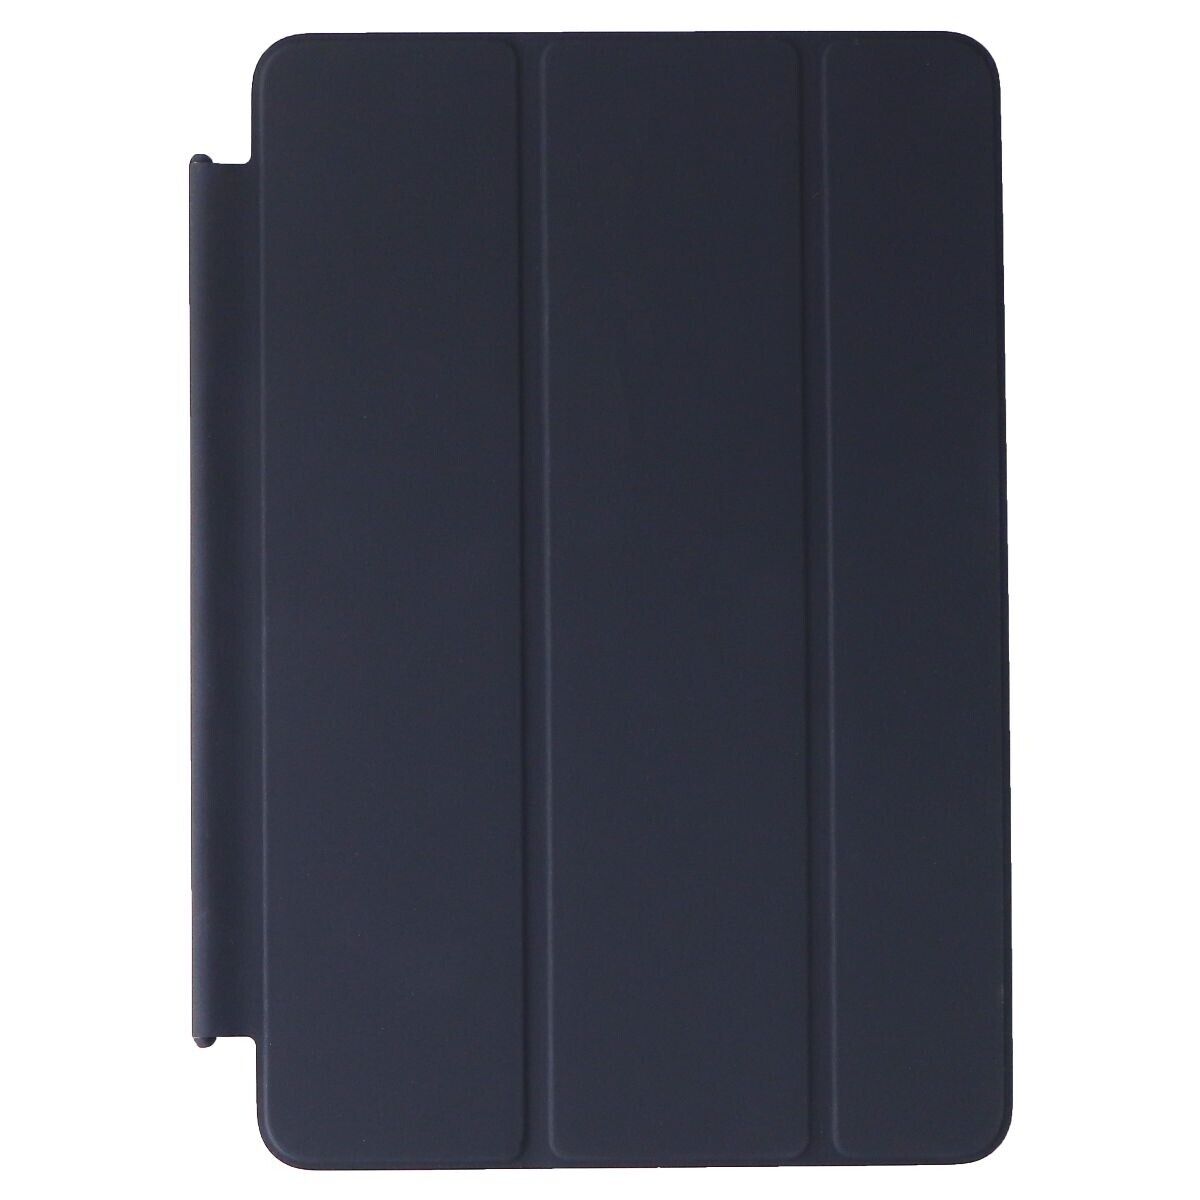 Apple Smart Cover for iPad mini 5th Gen (2019 Model) / Mini 4 - Charcoal Gray